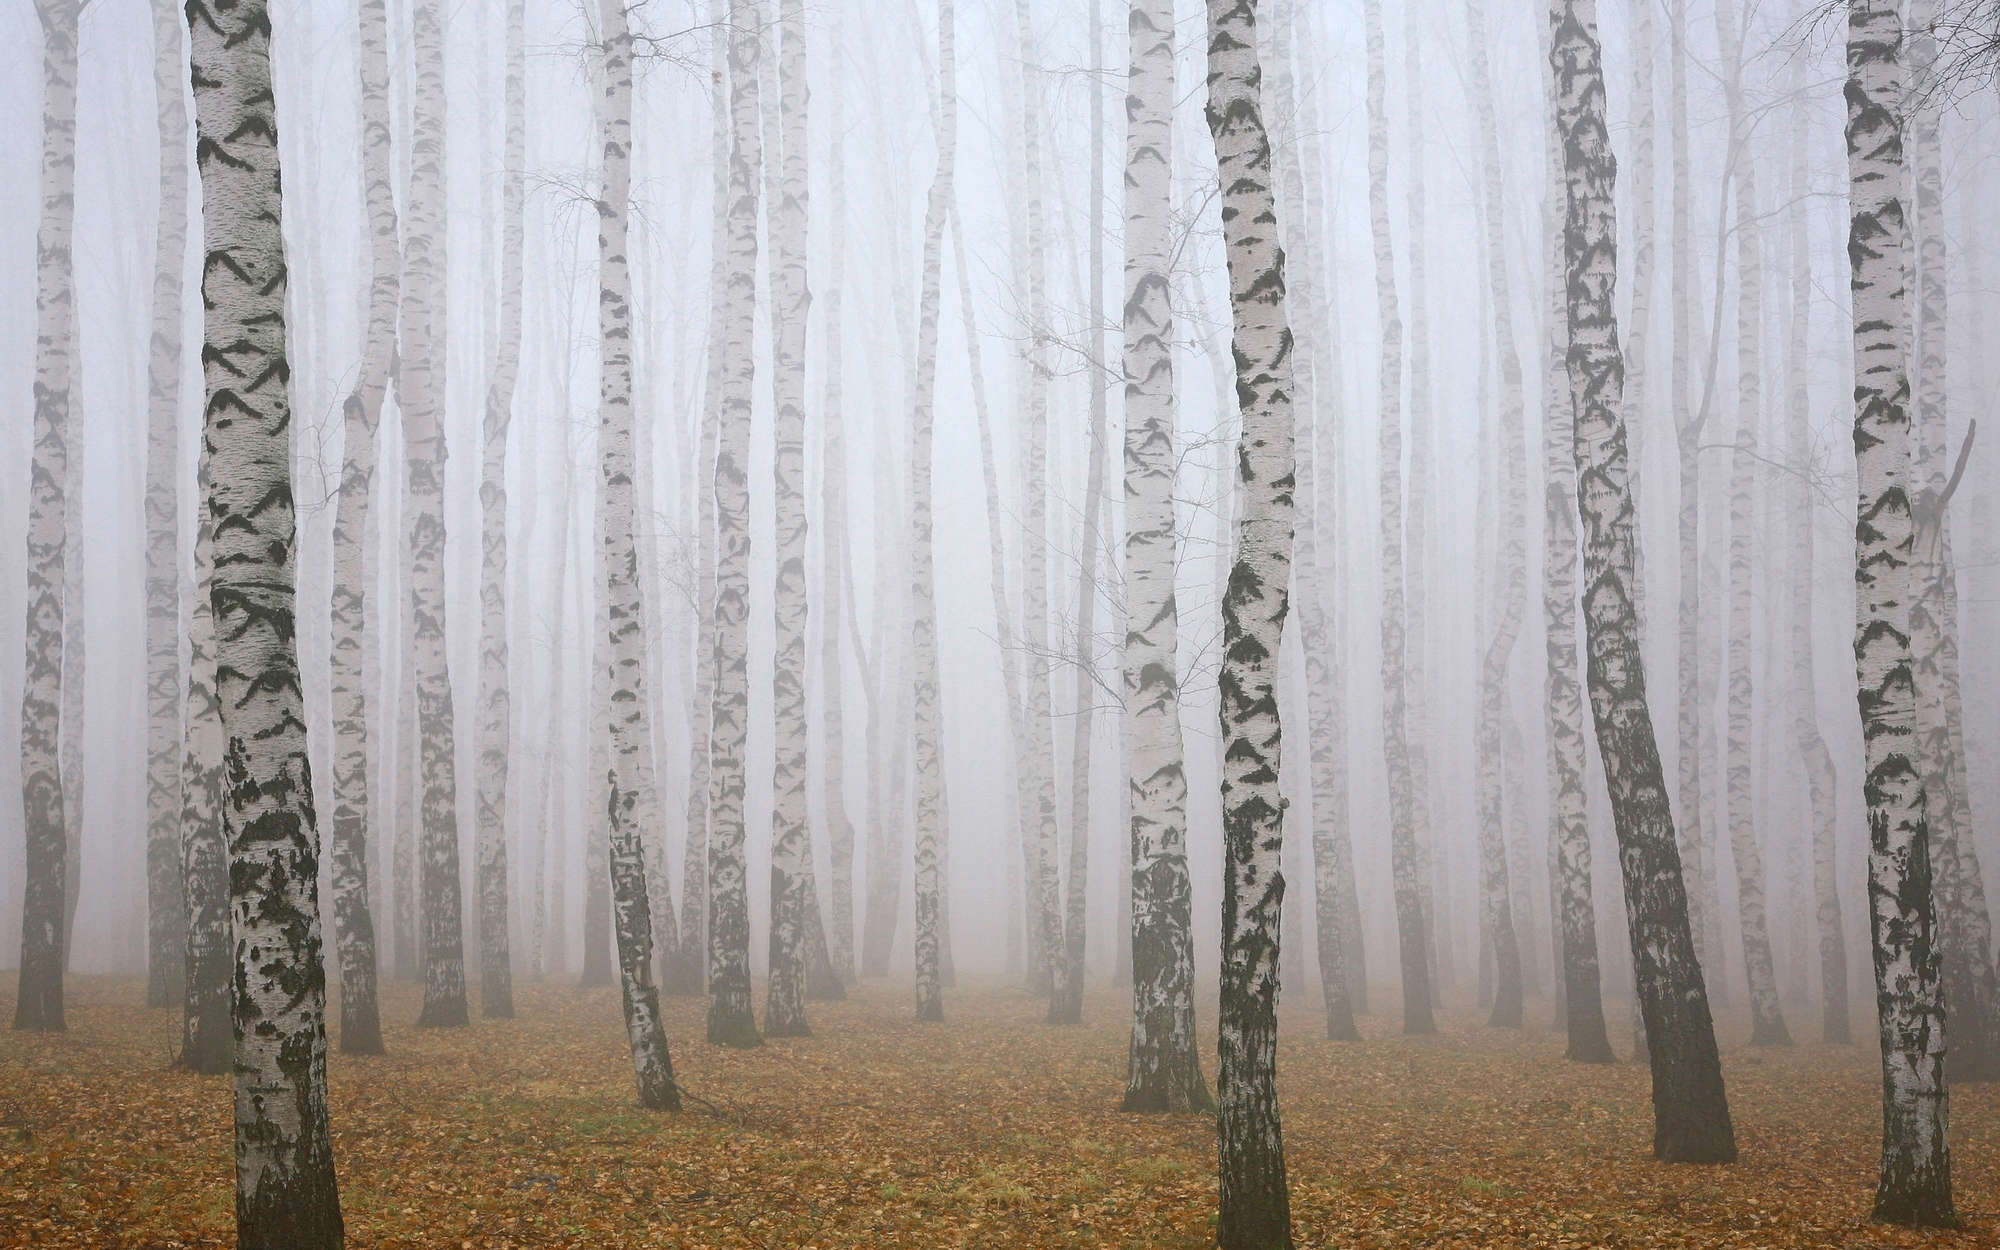             Fototapete Birkenwald im Nebel – Mattes Glattvlies
        